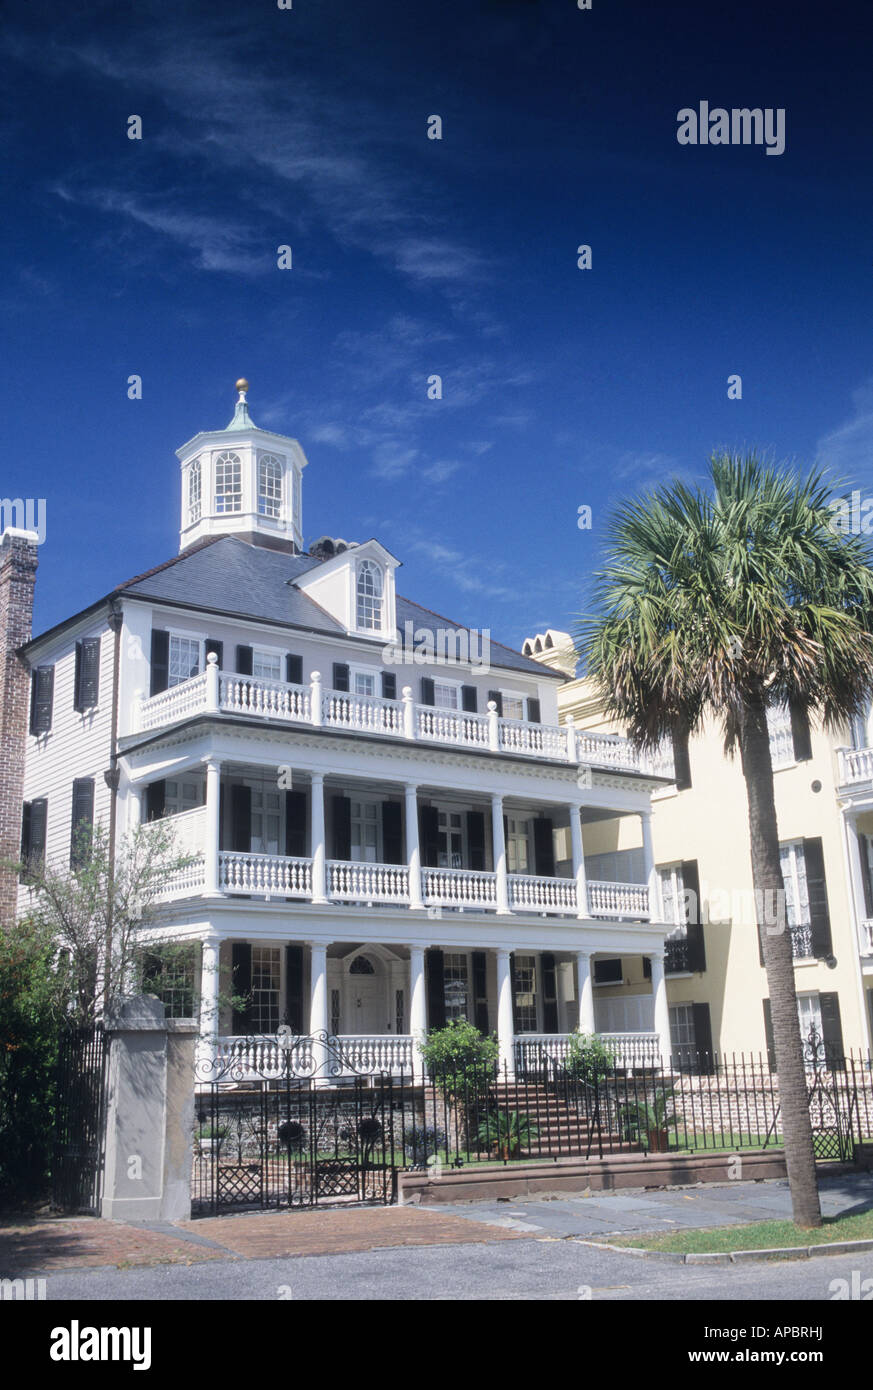 Charleston South Carolina USA antebellum mansion US Civil War history Stock Photo